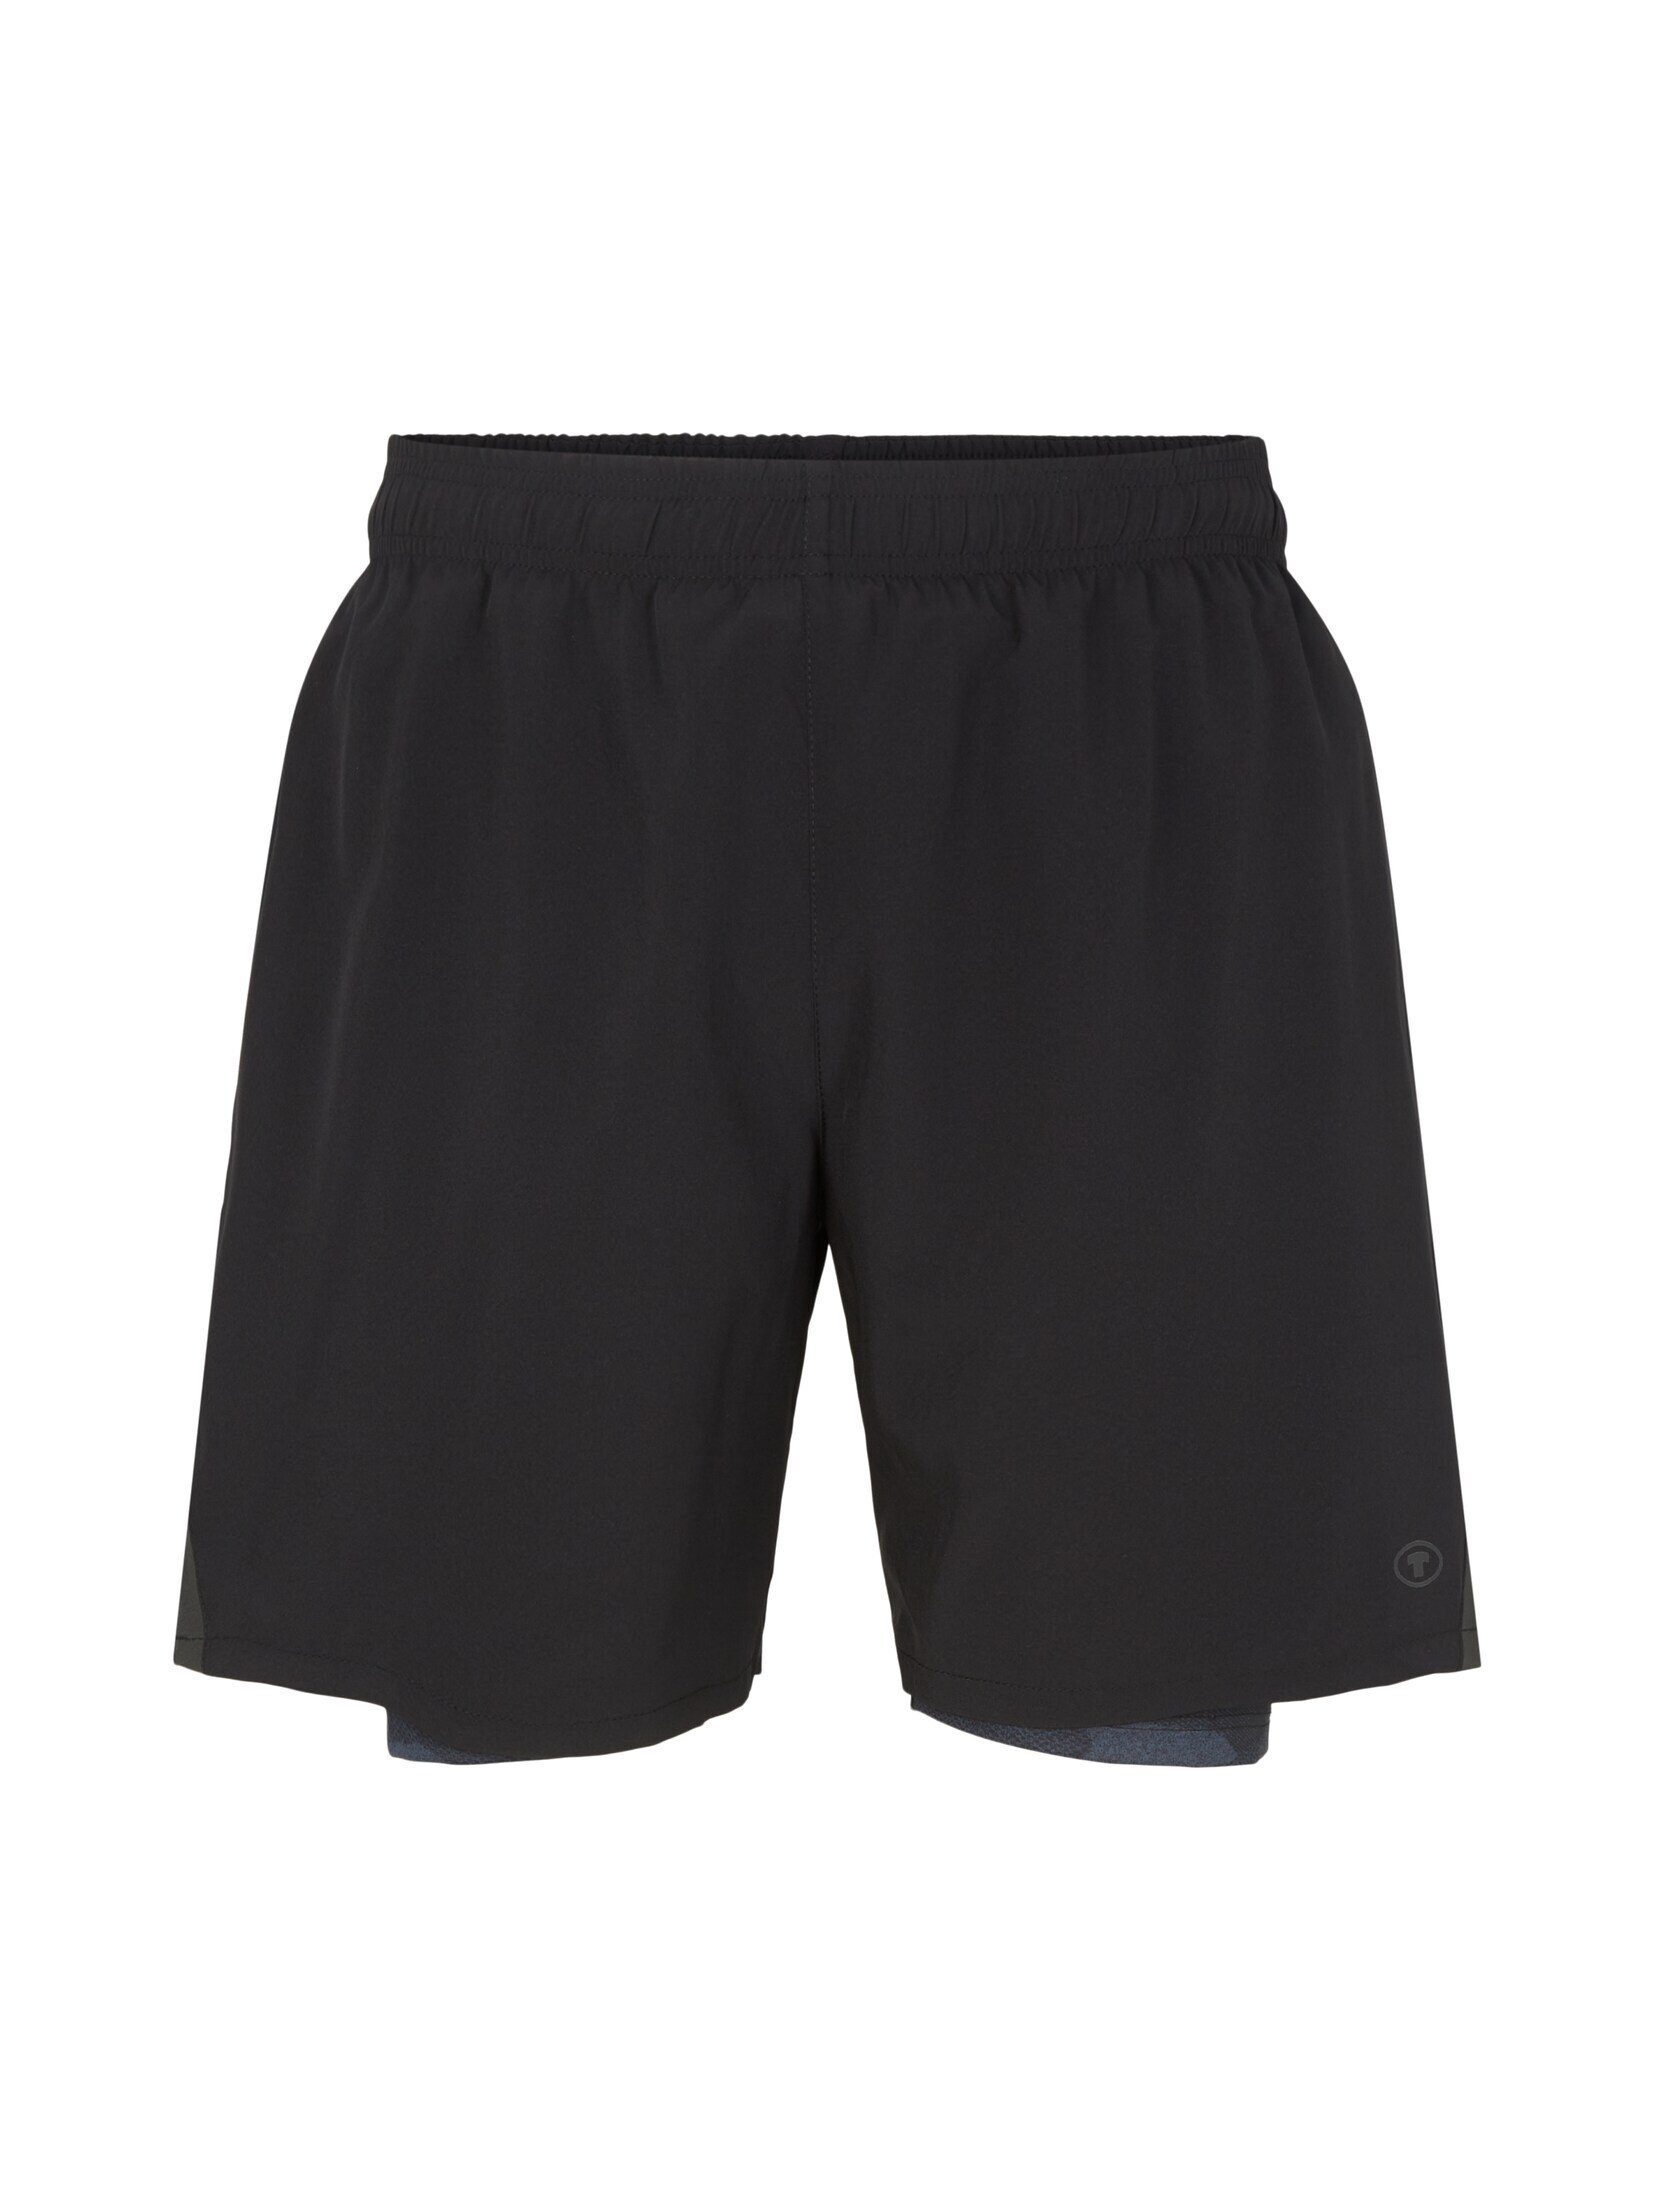 TOM 2-in-1 Shorts TAILOR Trainingsshirt Black/Black